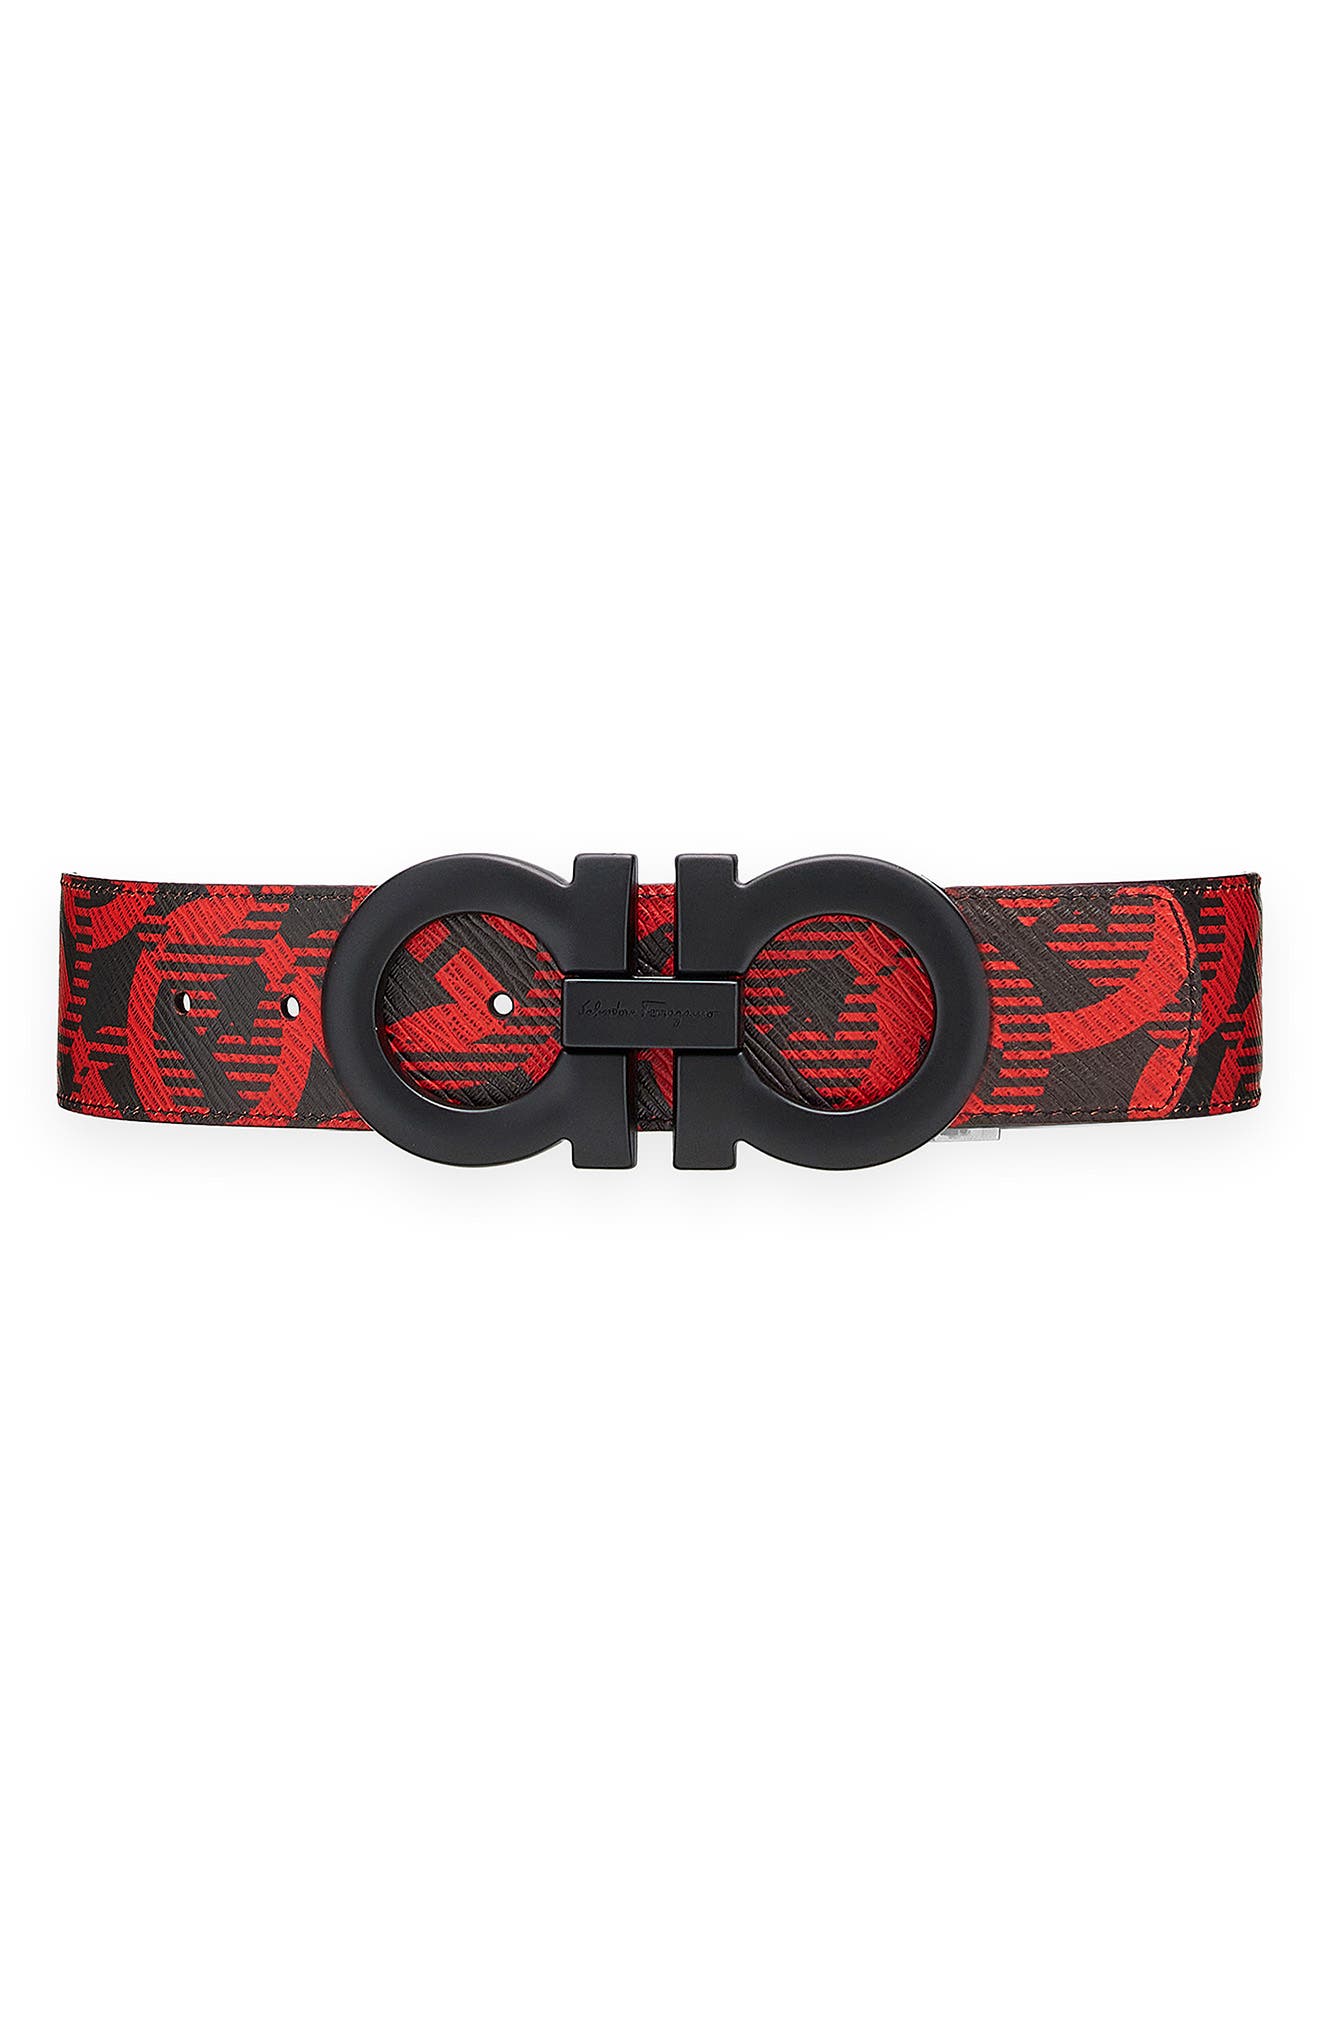 Salvatore Ferragamo Reversible Double Gancio Leather Belt in Nero/Nail Polish Red Nero at Nordstrom, Size 40 Us